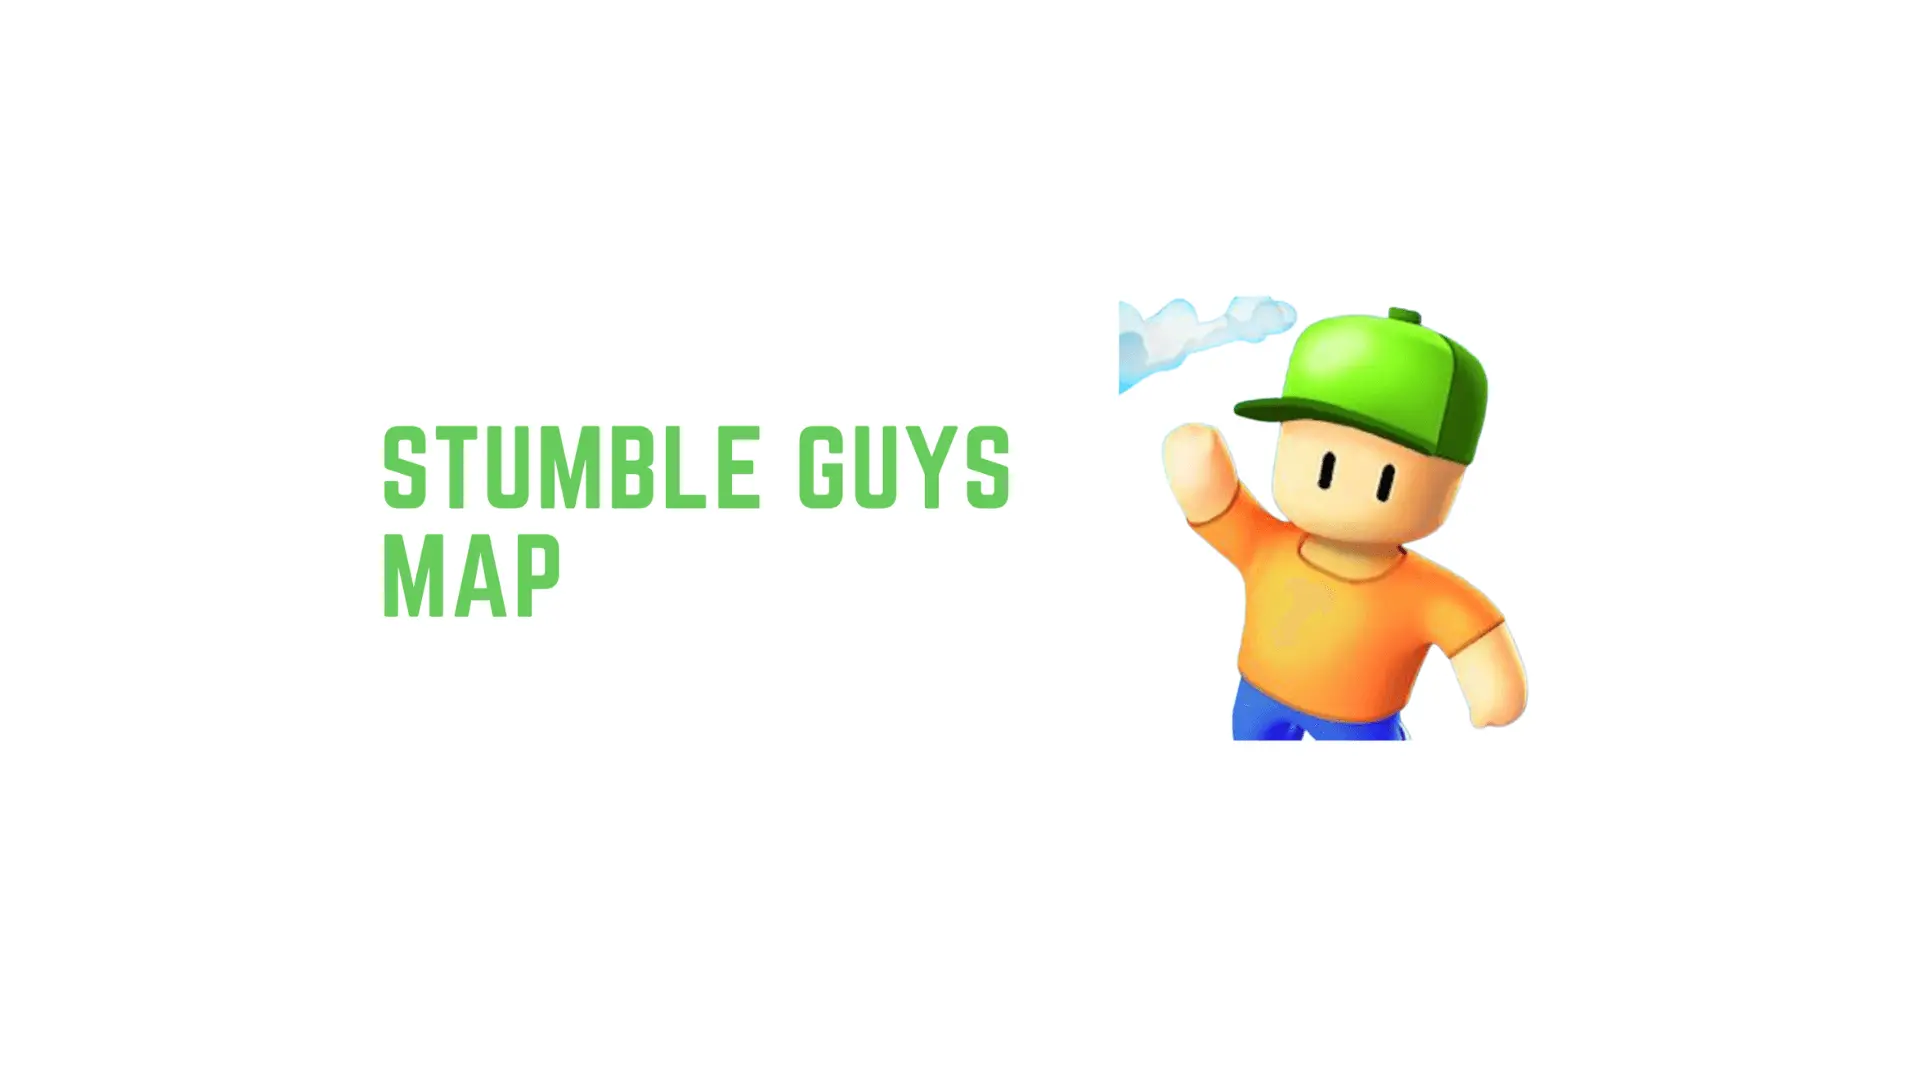 Stumble Guys maps